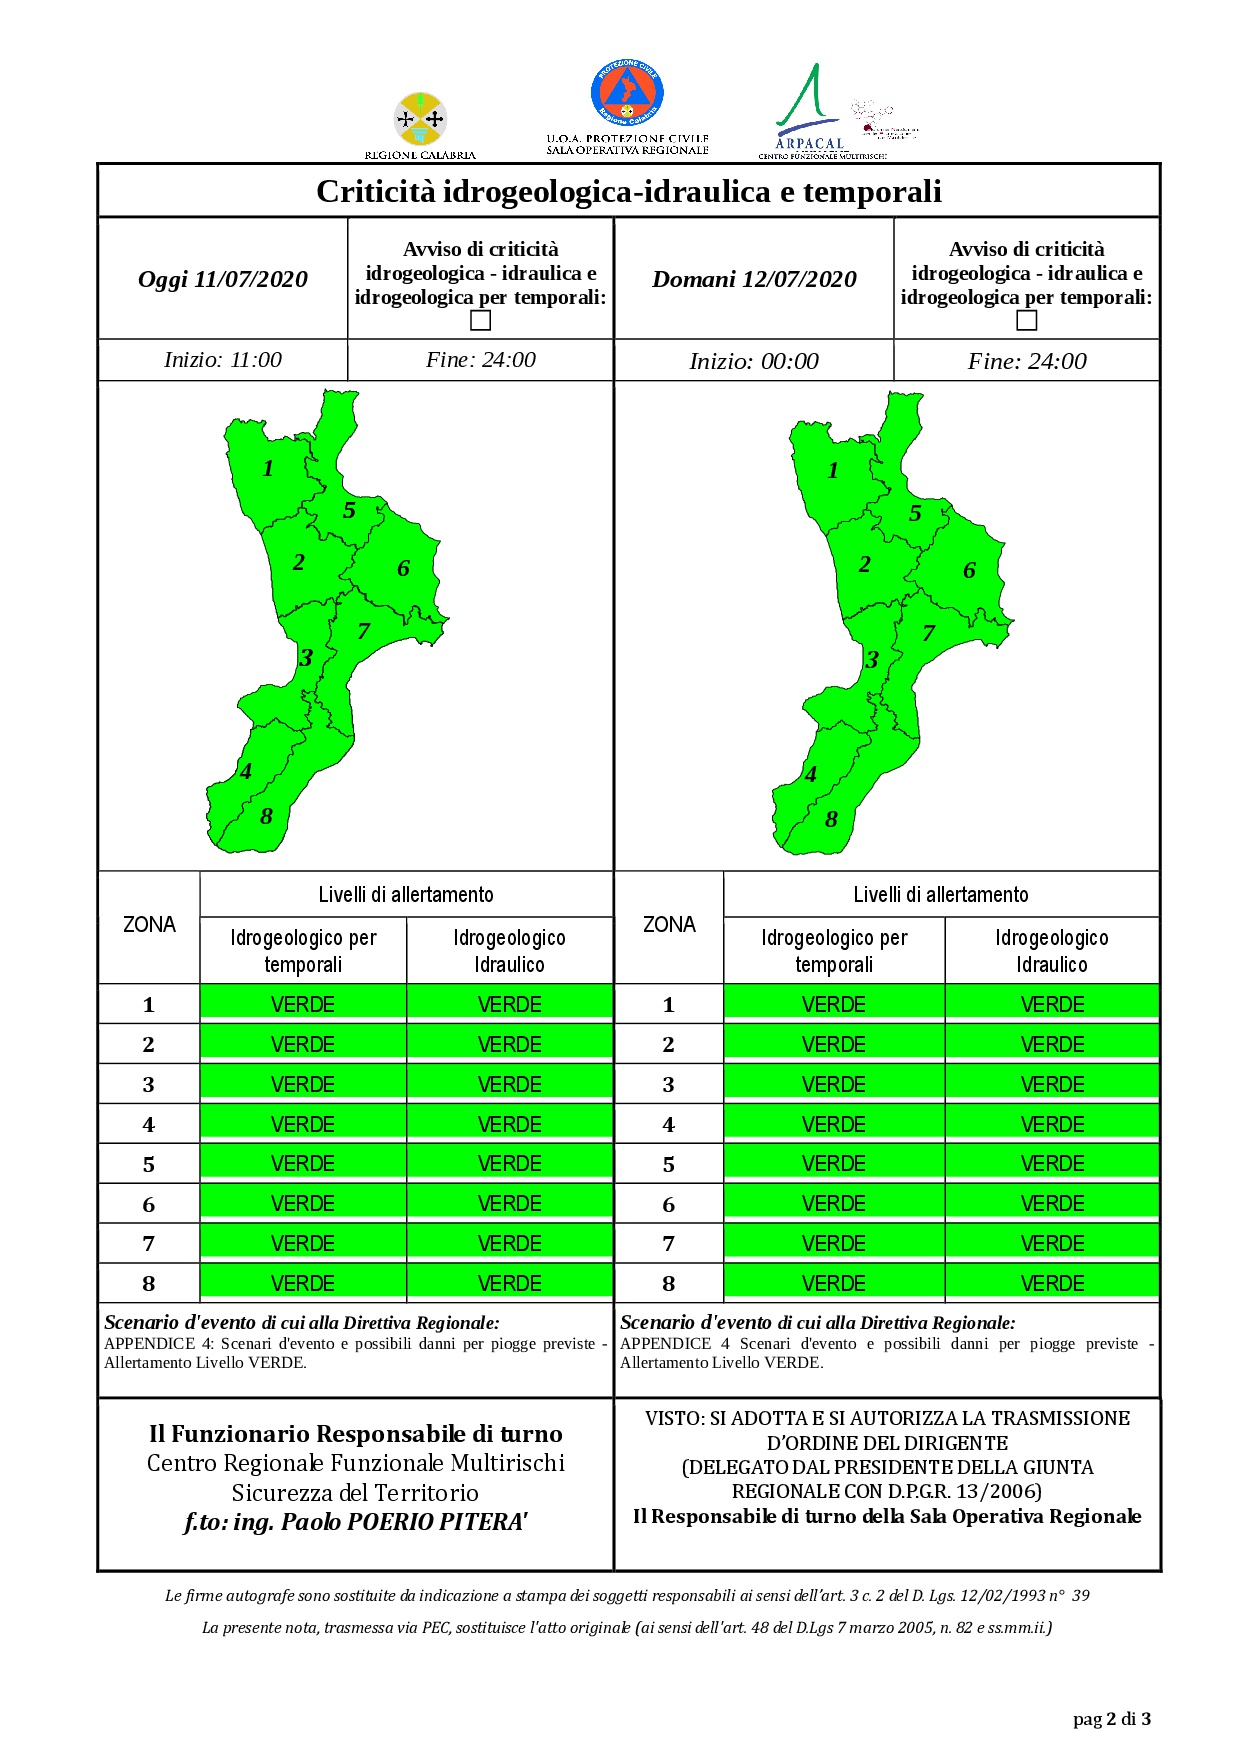 Criticità idrogeologica-idraulica e temporali in Calabria 11-07-2020